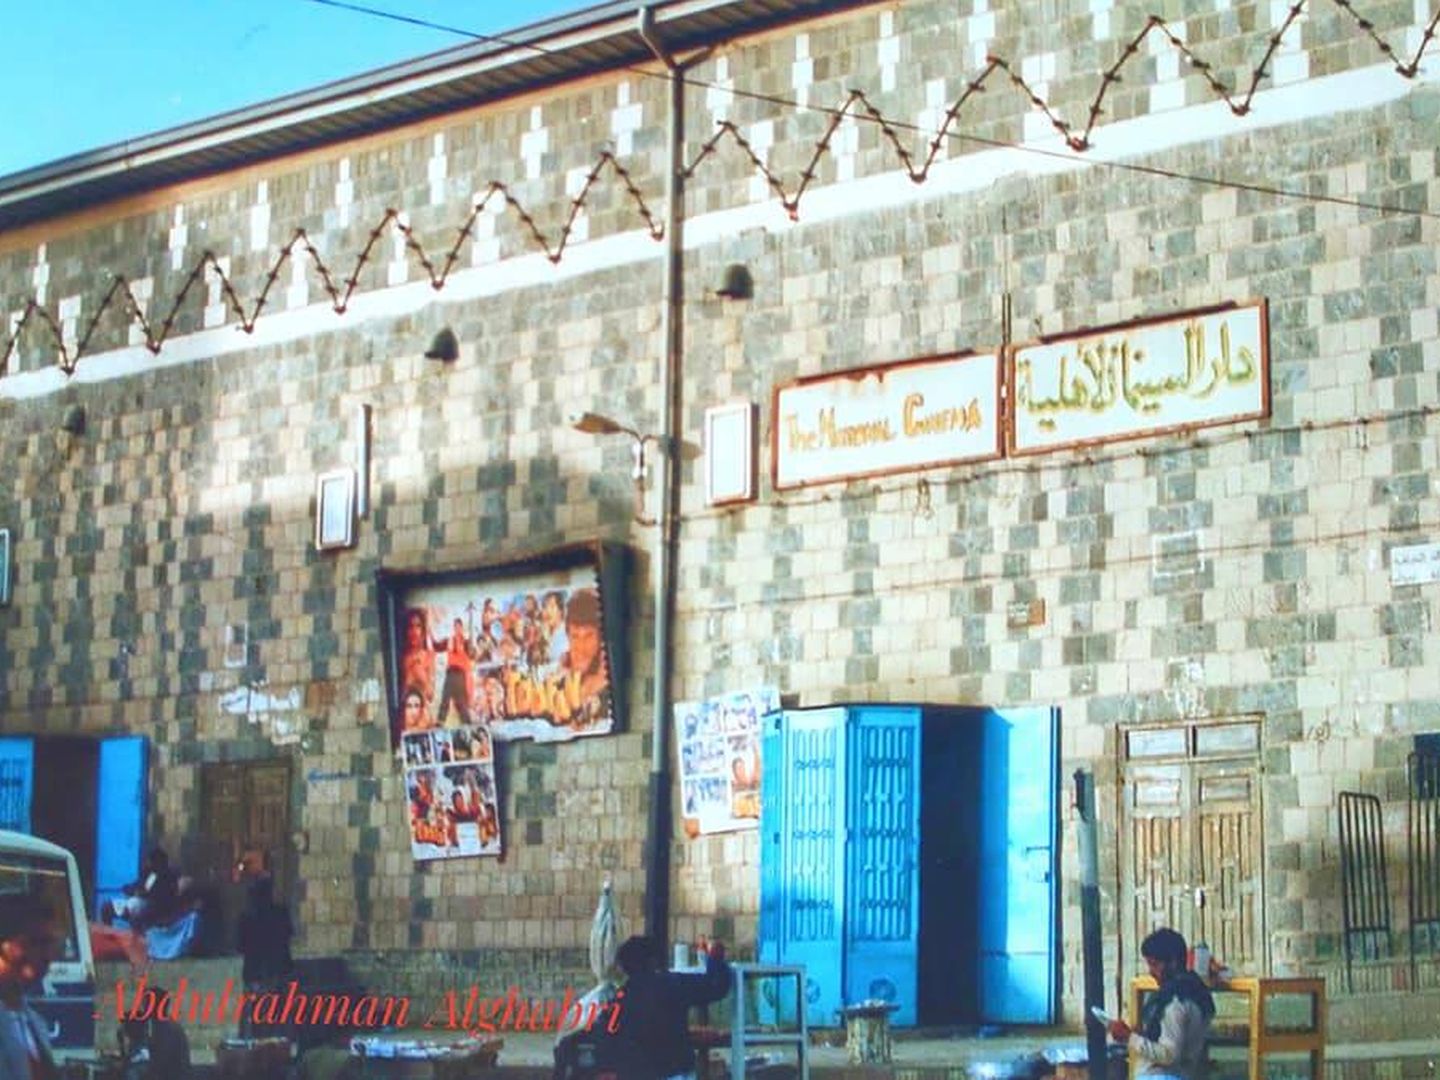 The National Cinema en Yemen.